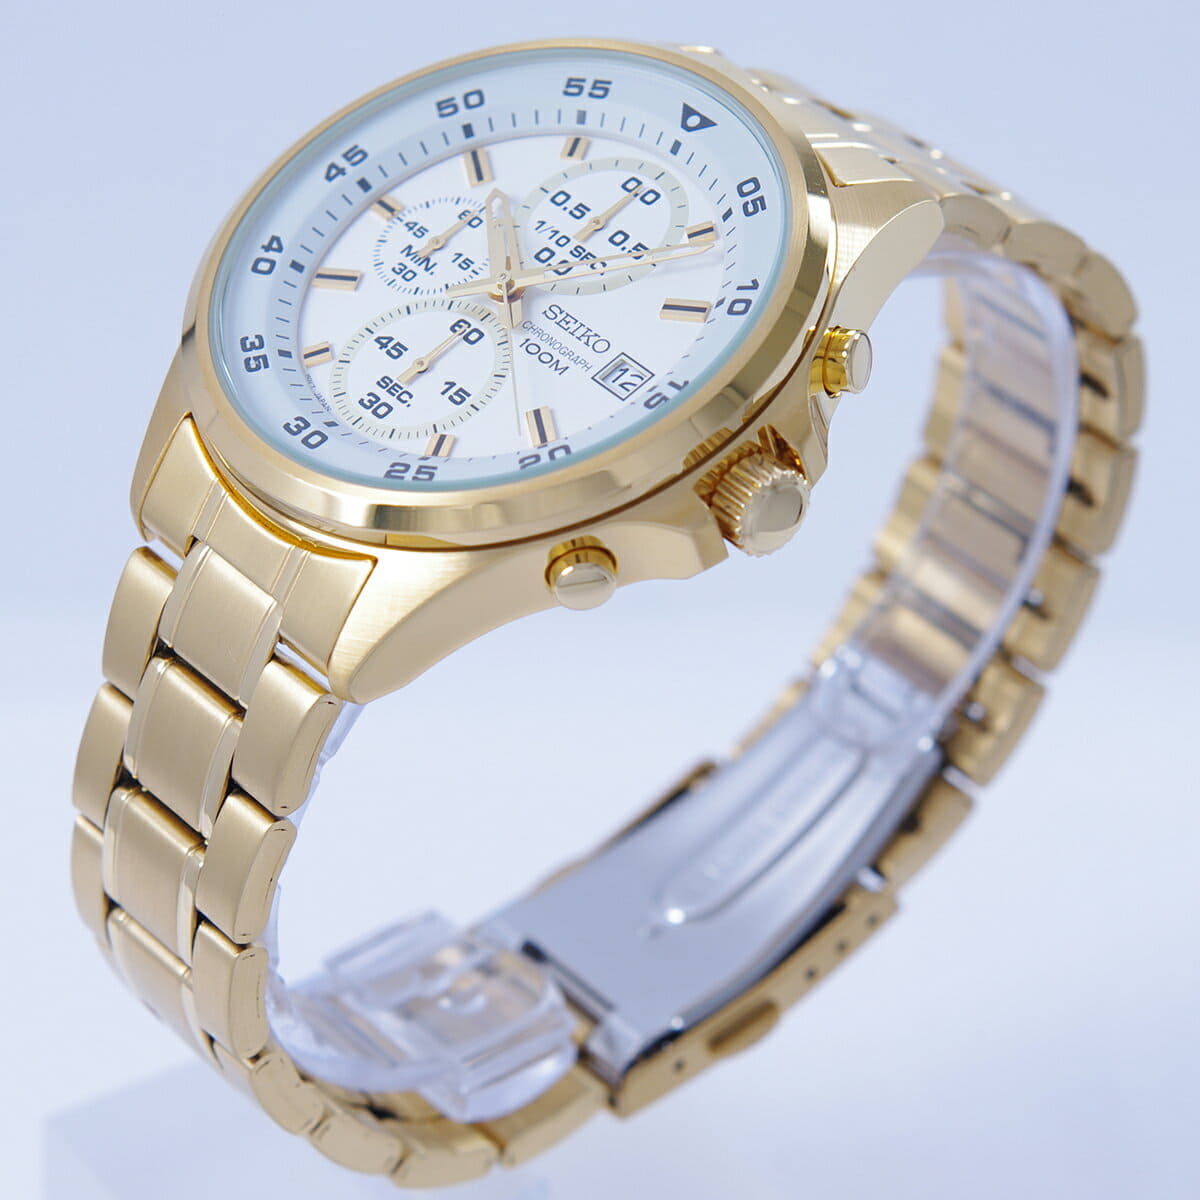 New]SEIKO SEIKO quartz Chronograph 100M waterproofing white clockface Gold  SKS632P1 mens [ product] - BE FORWARD Store